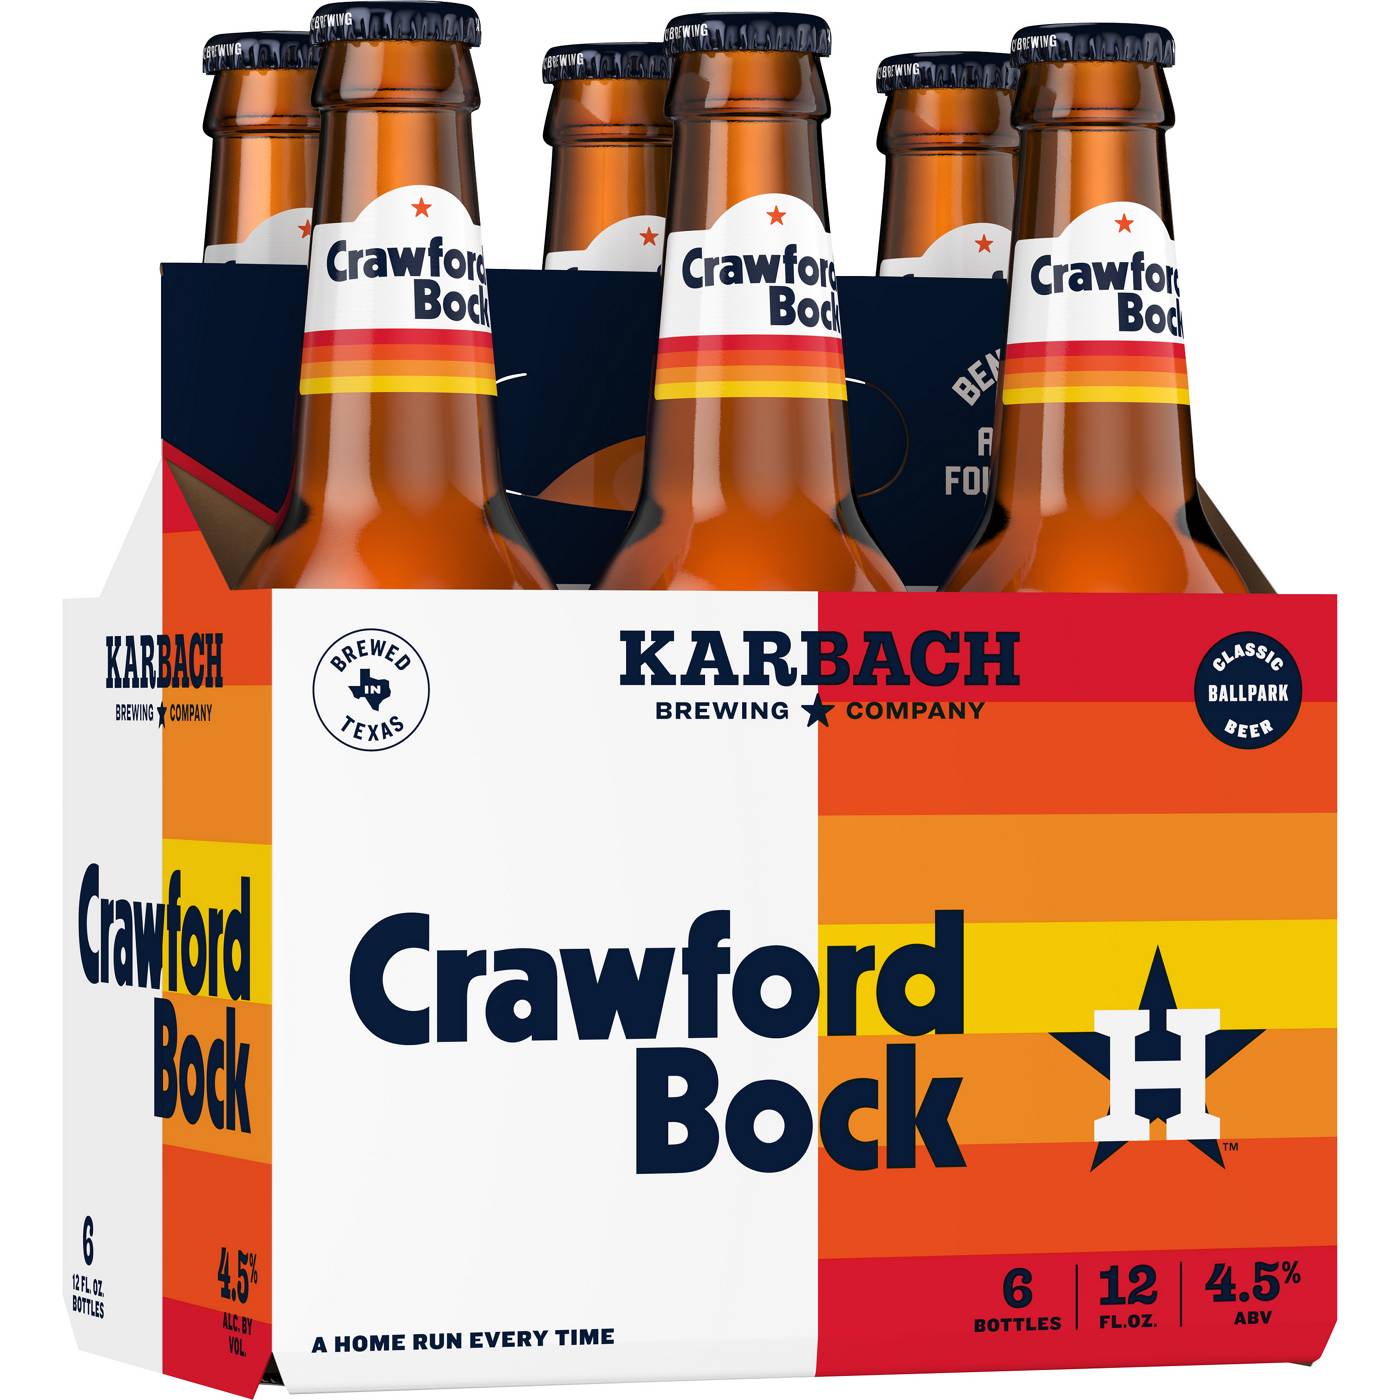 Karbach Crawford Bock Beer 12 oz Bottles; image 1 of 2